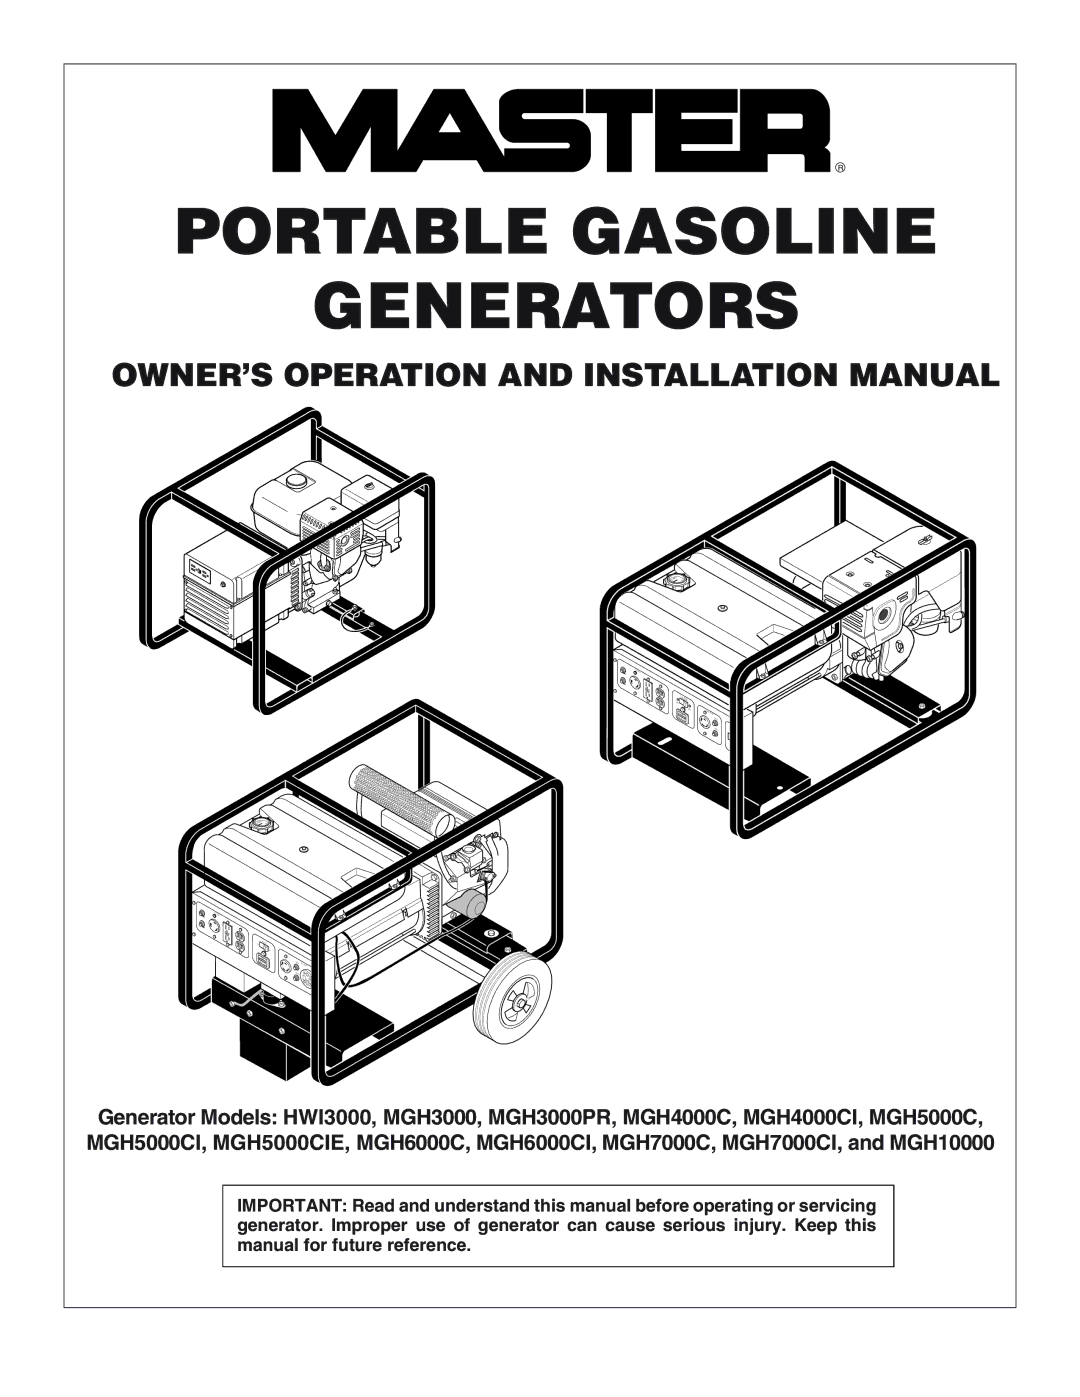 Master Lock MGH4000C, MGH3000PR installation manual Portable Gasoline Generators 